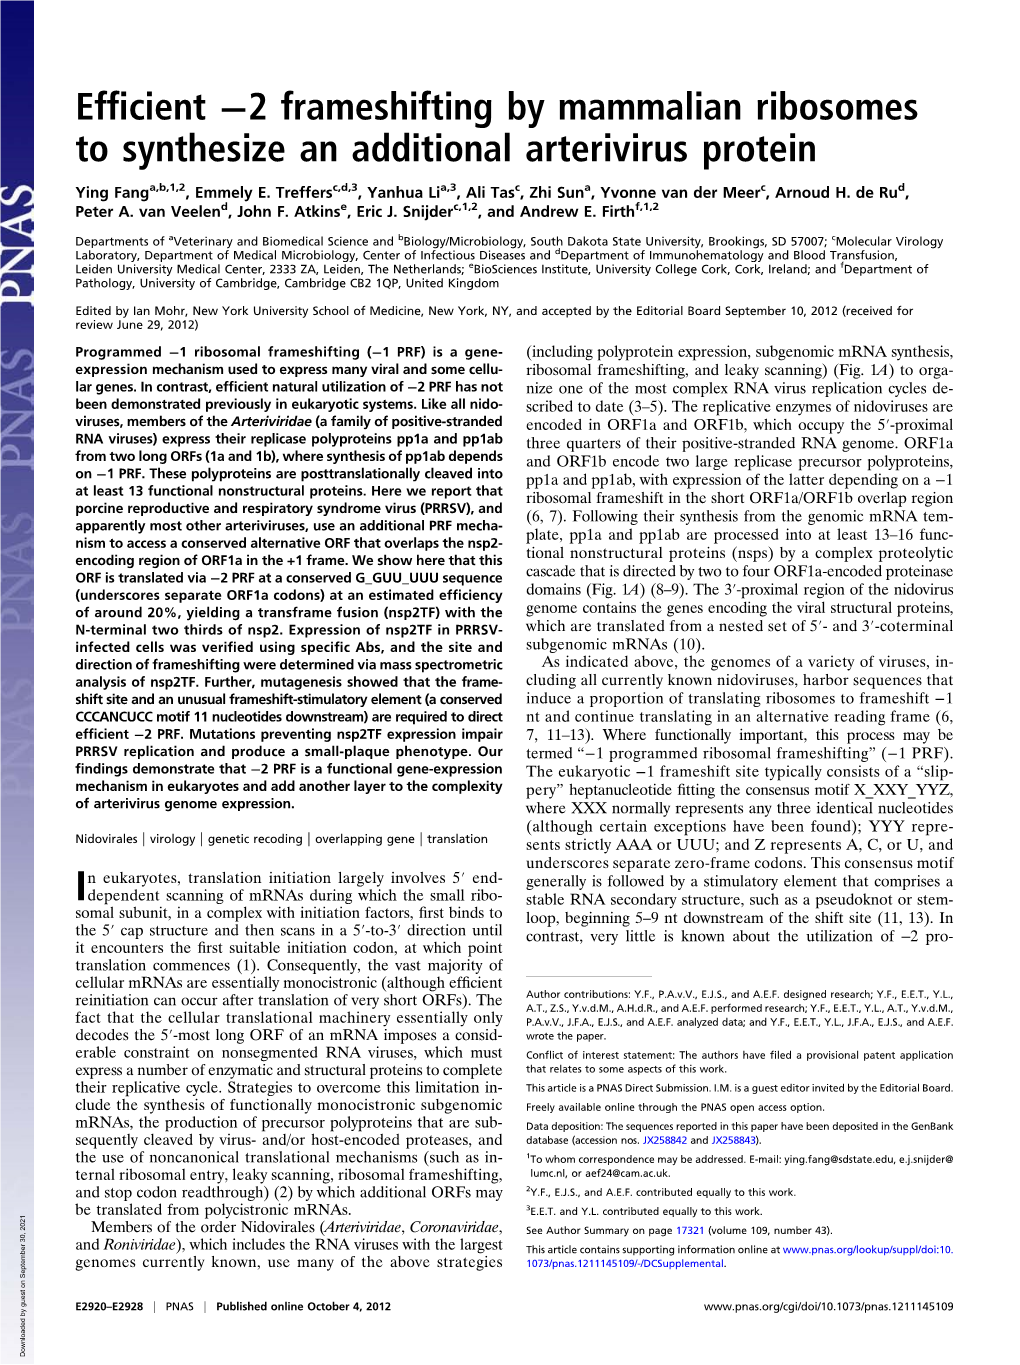 Efficient −2 Frameshifting by Mammalian Ribosomes To